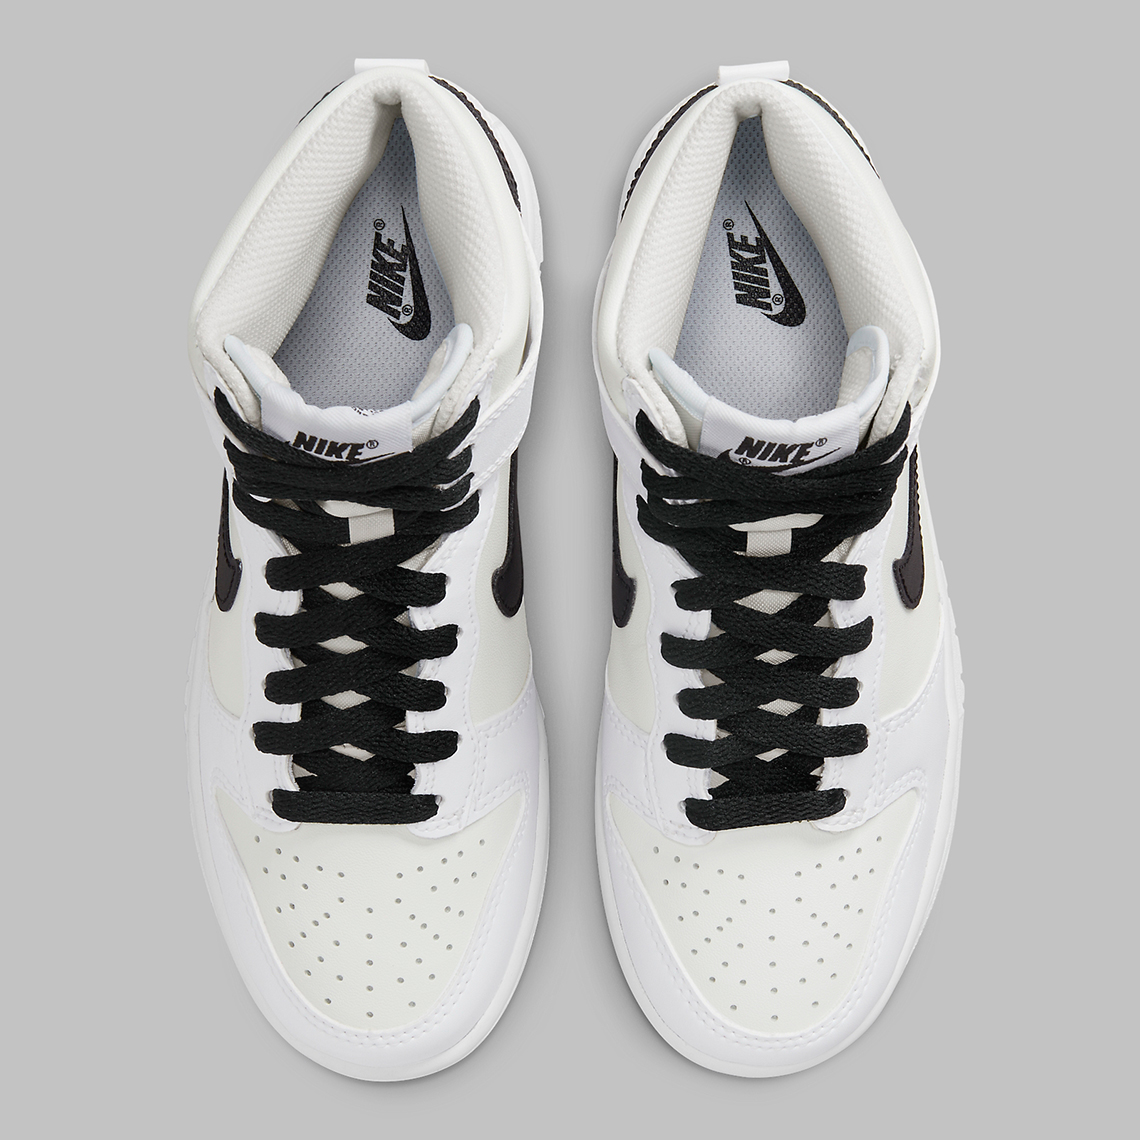 Nike Dunk High Gs White Black Db2179 108 Release Date 8